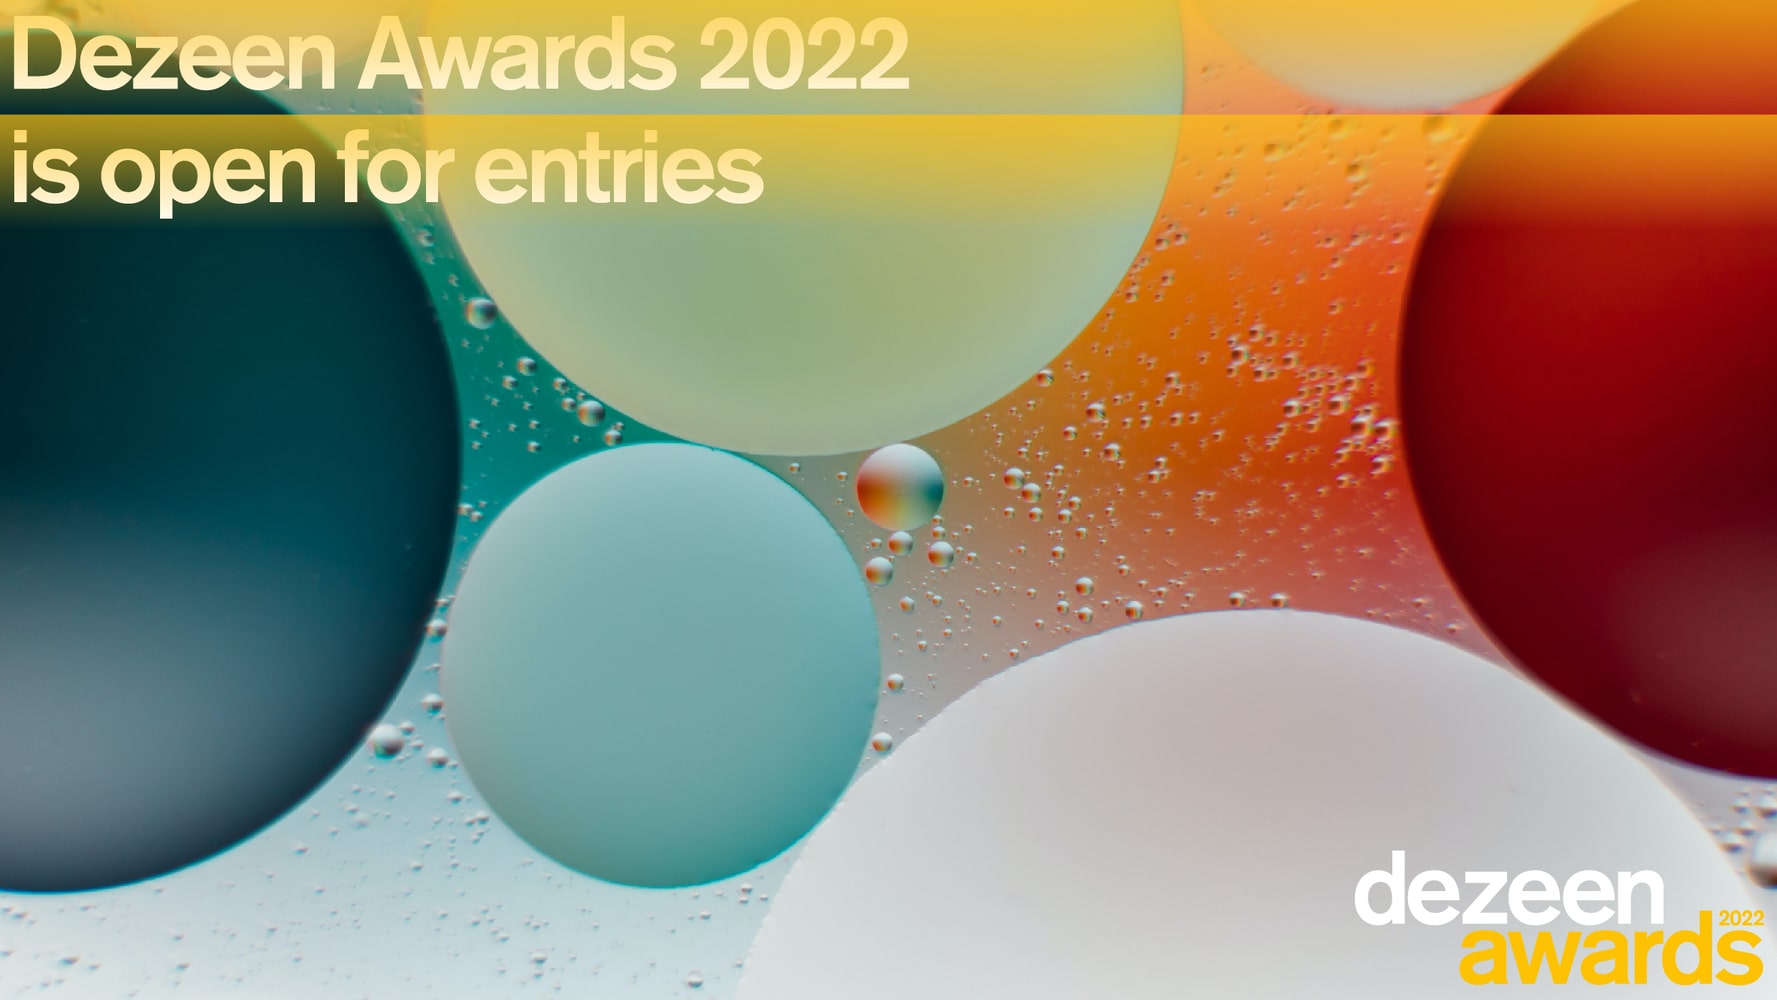 adf-csr-awards-dezeen-awards-2022-open-for-entries